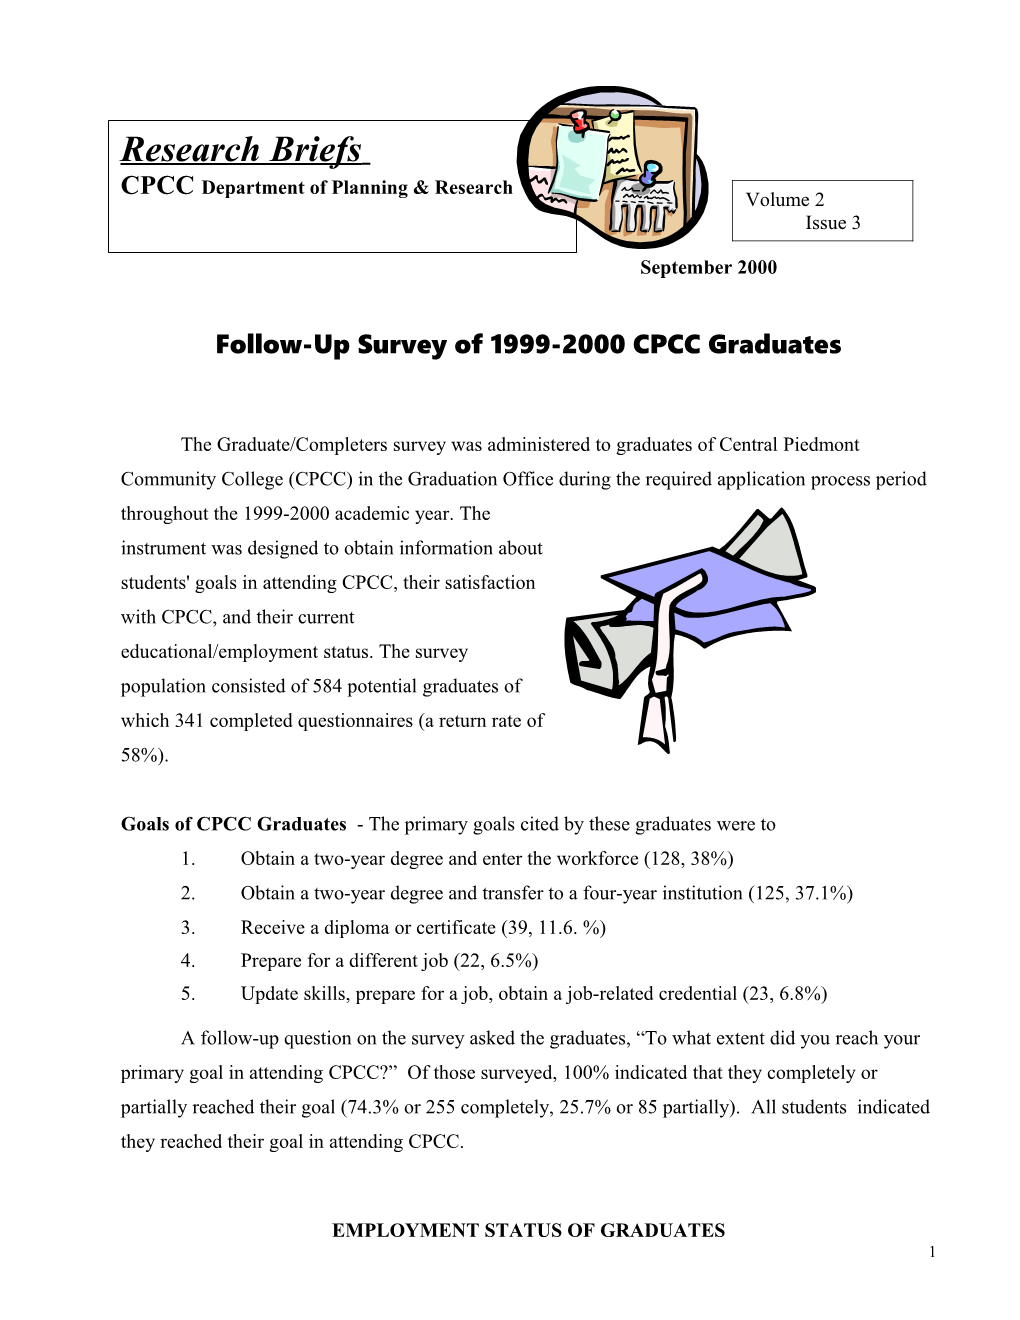 Follow-Up Survey of 1999-2000 CPCC Graduates